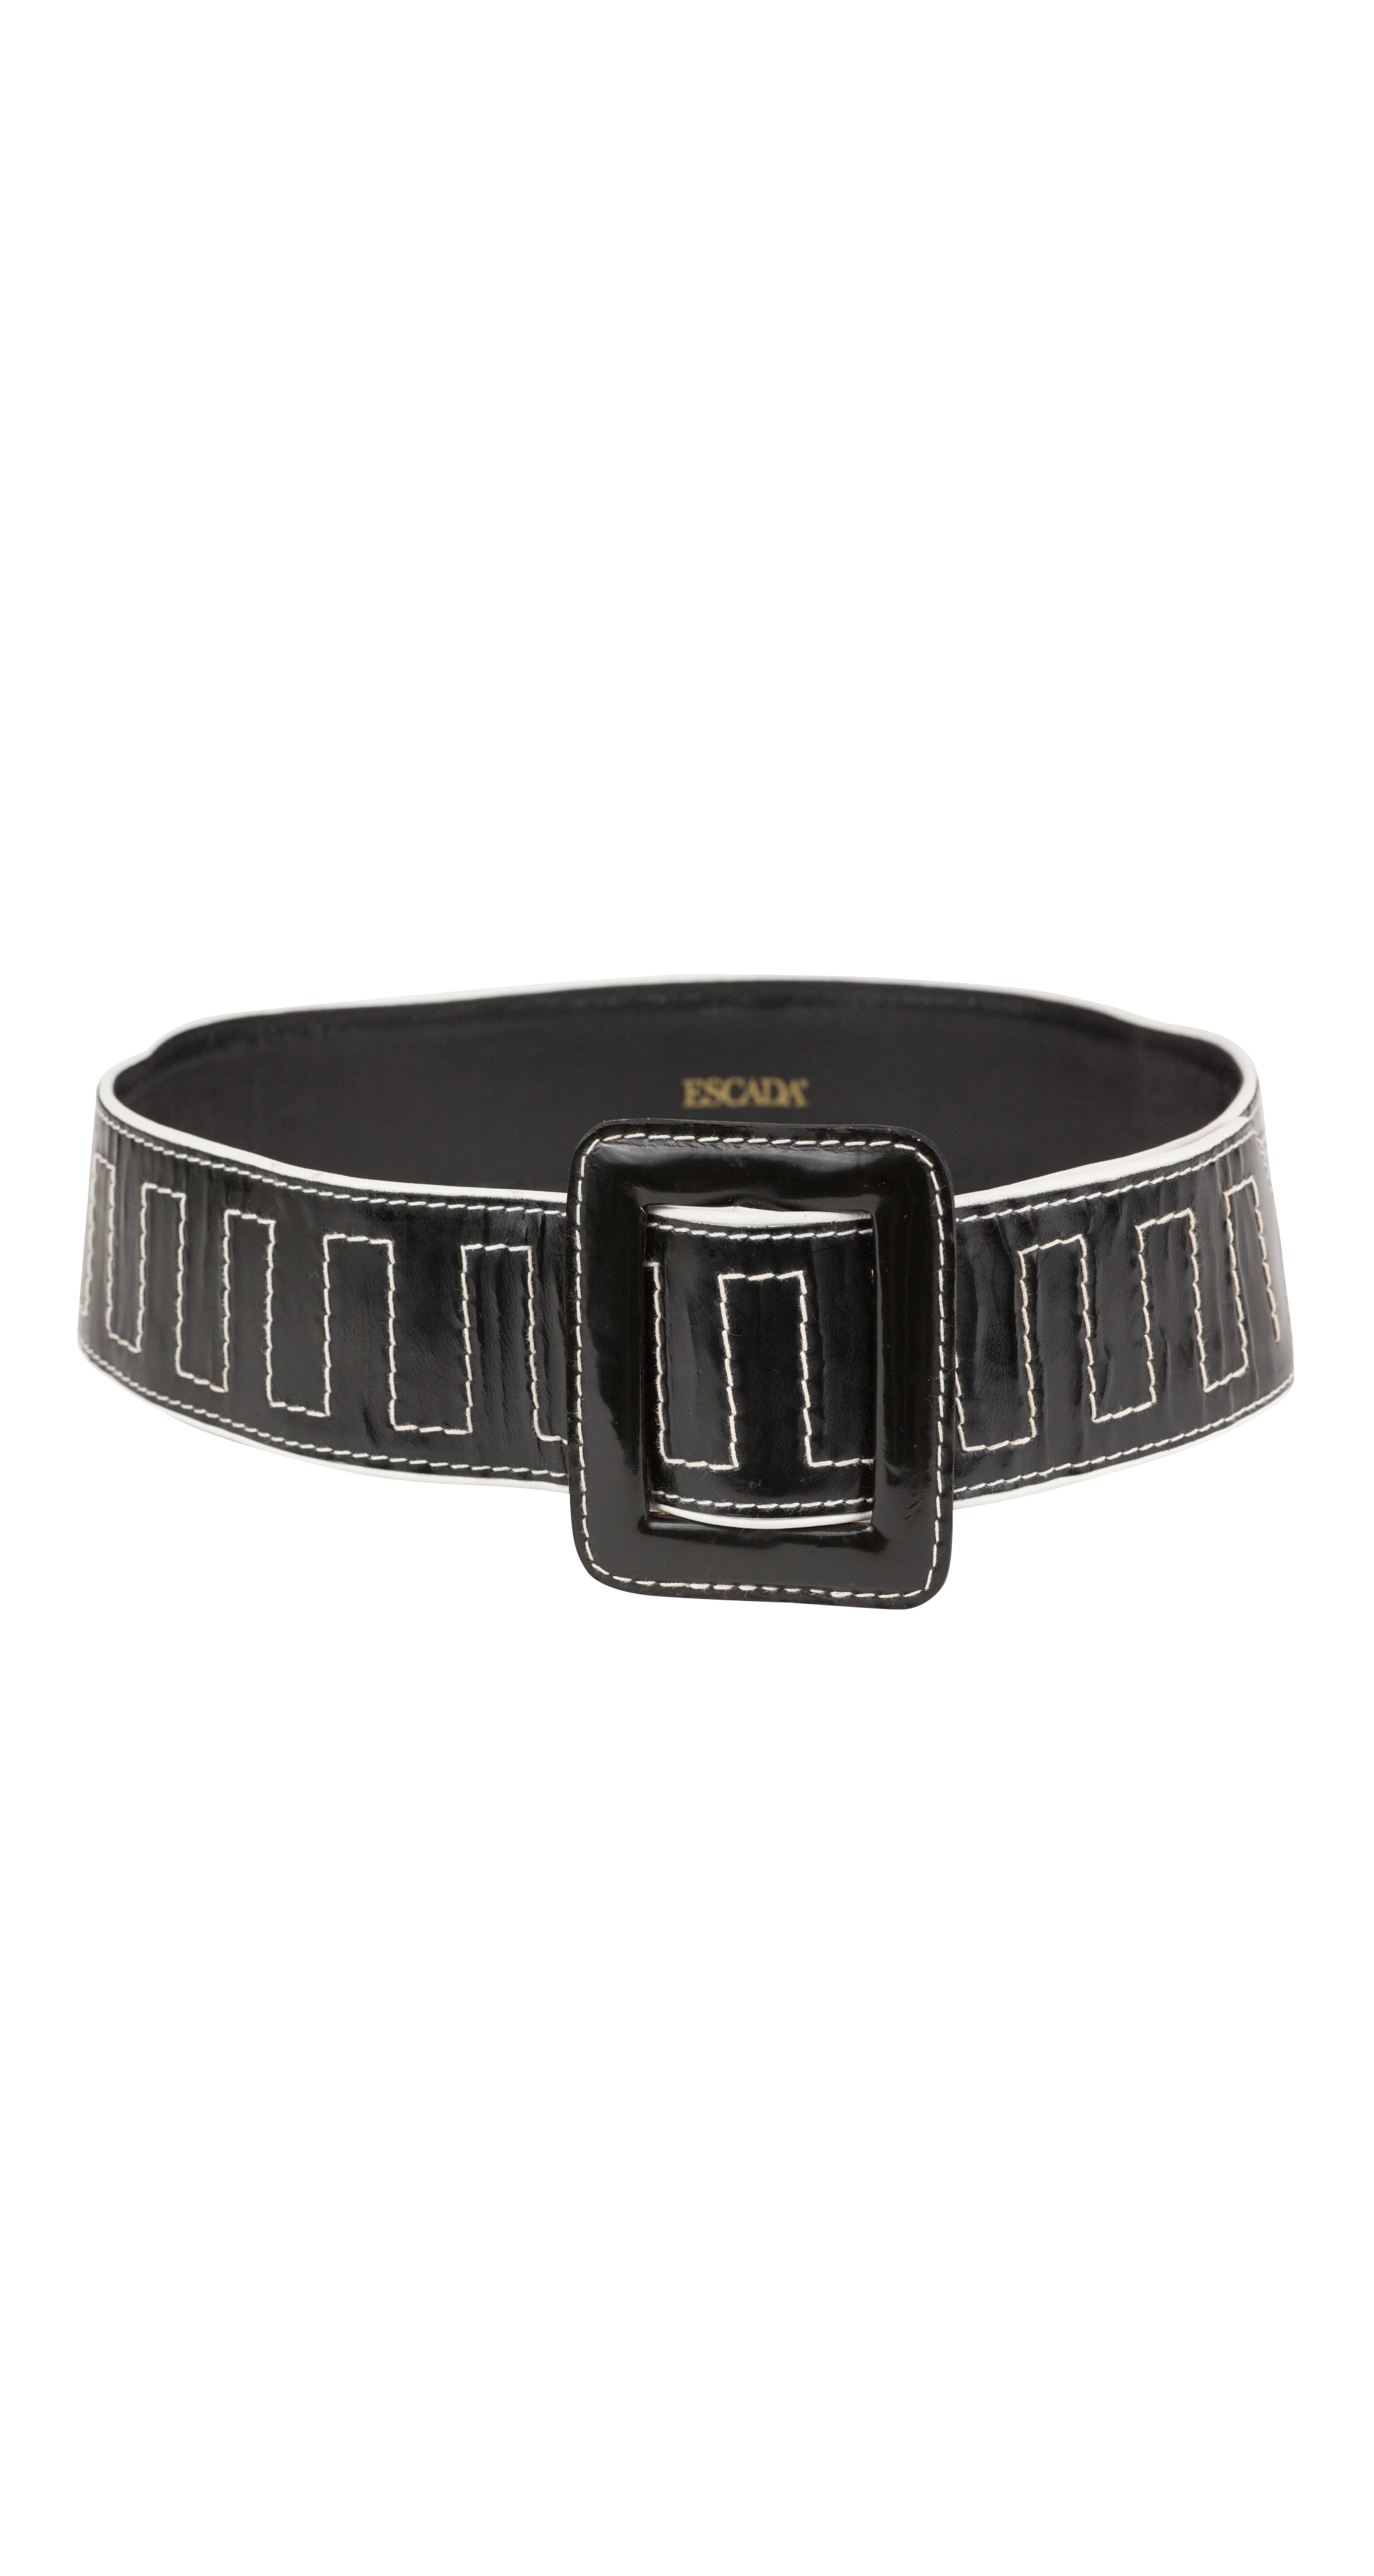 1986 Ad Campaign Black Patent Leather Waist Belt